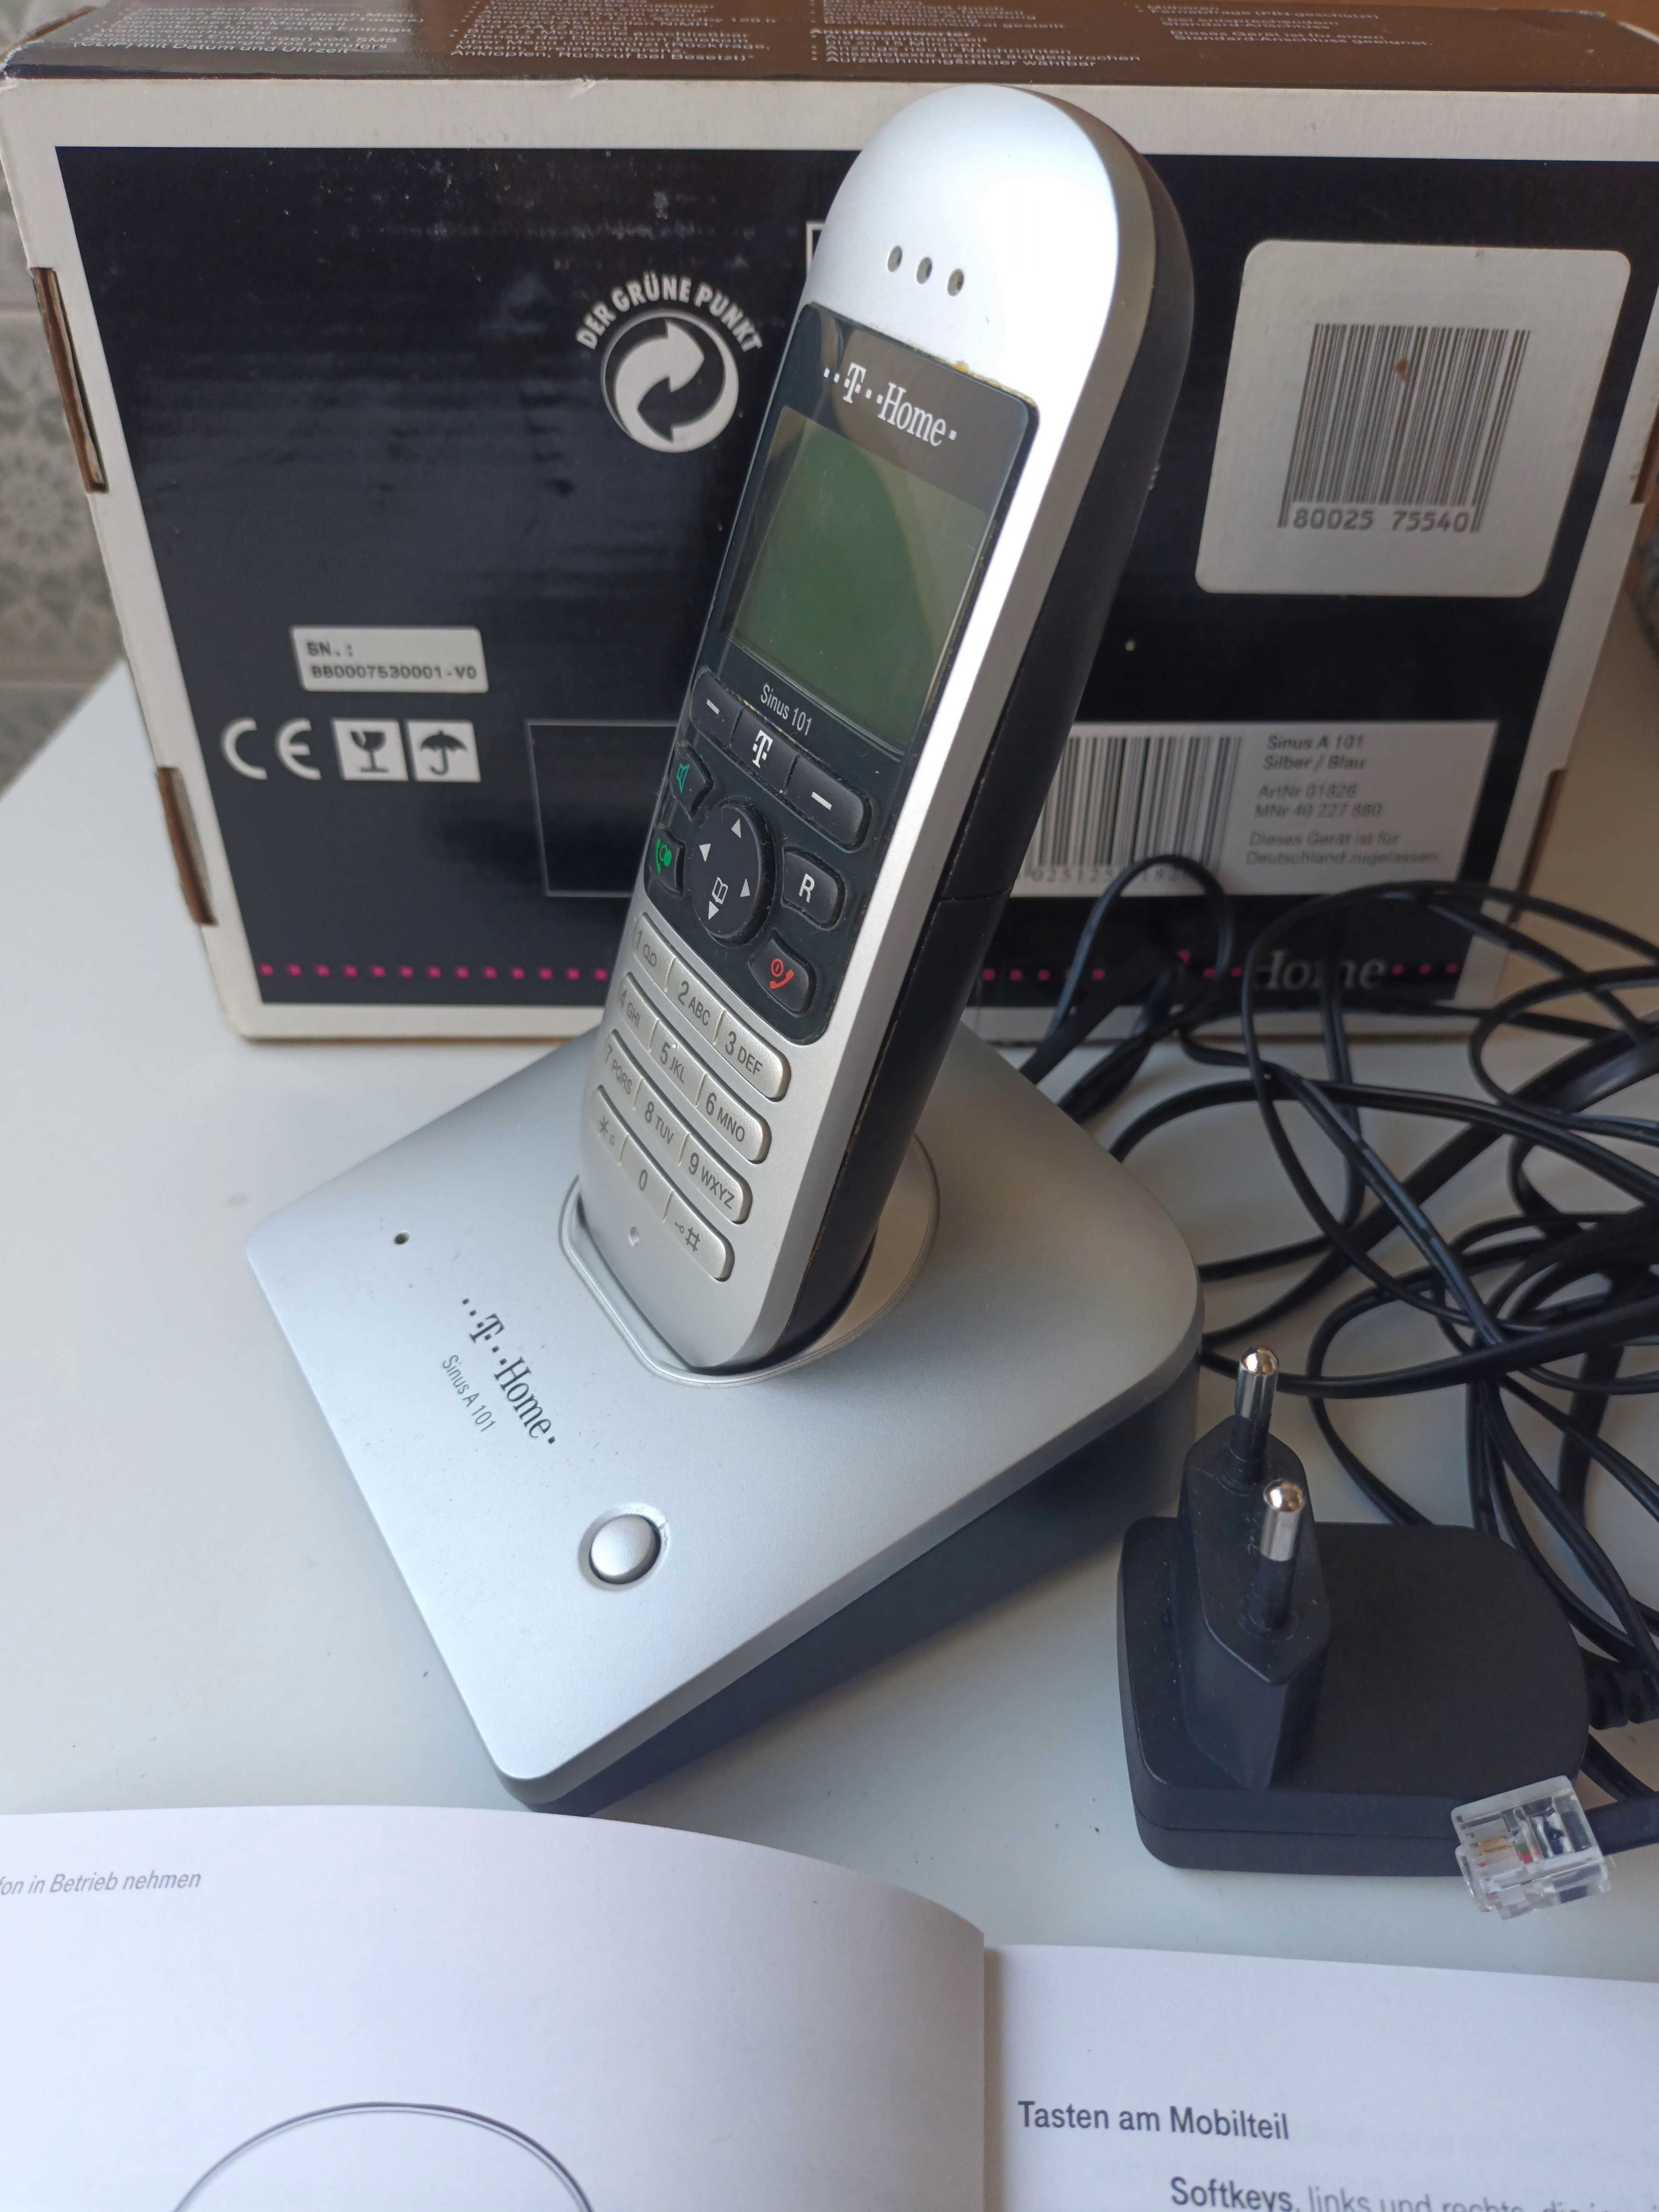 Telefone portátil para rede fixa - T-Mobil, modelo Sinus A 10